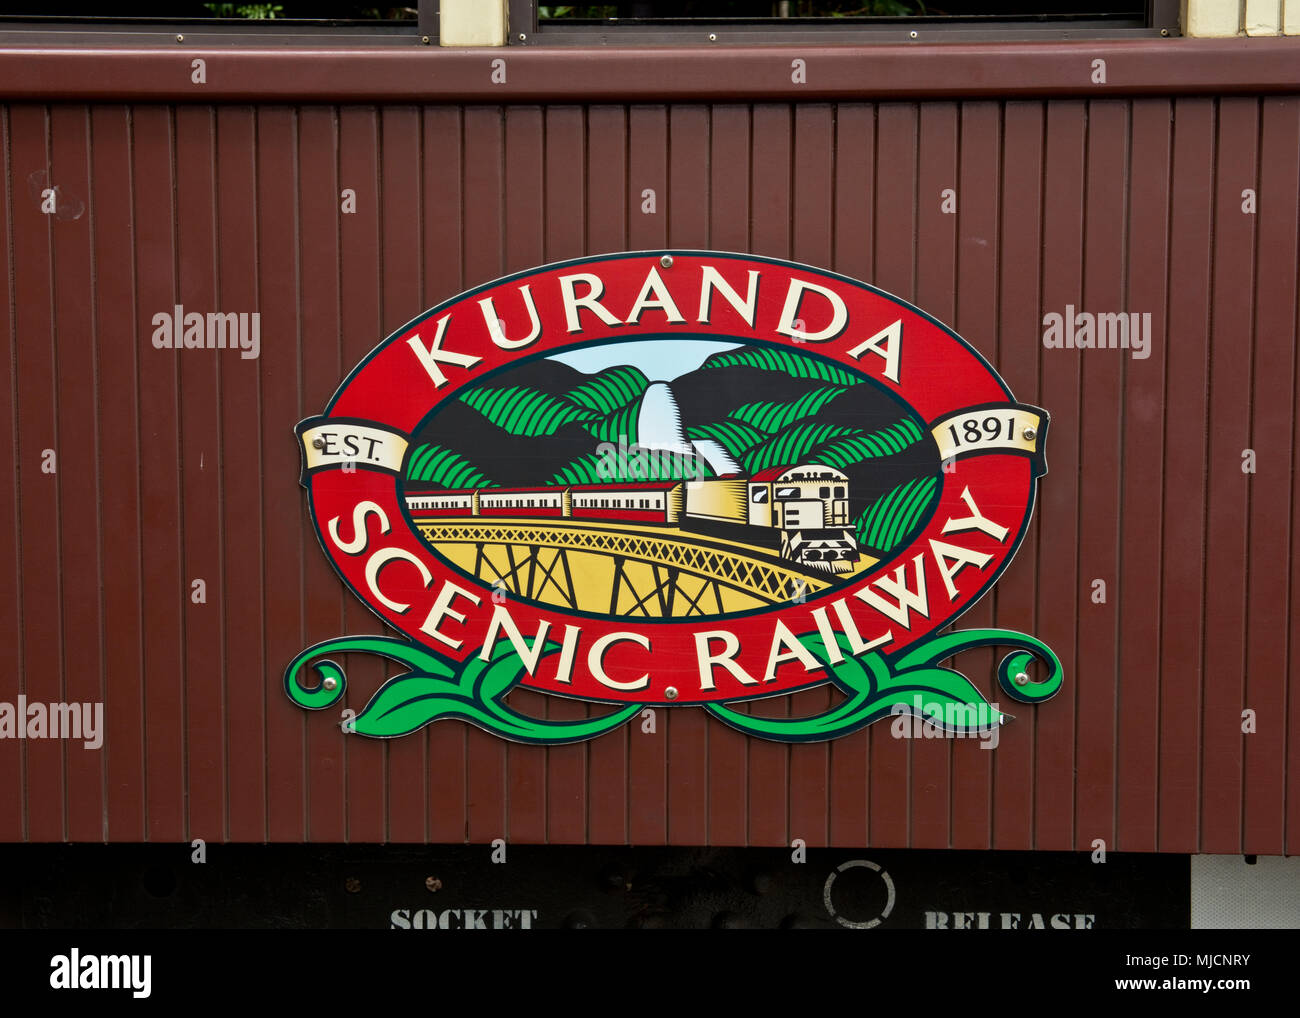 Emblem of Kuranda Scenic Railway on the side of train passenger carriage. Kuranda Station, Queensland. Stock Photo